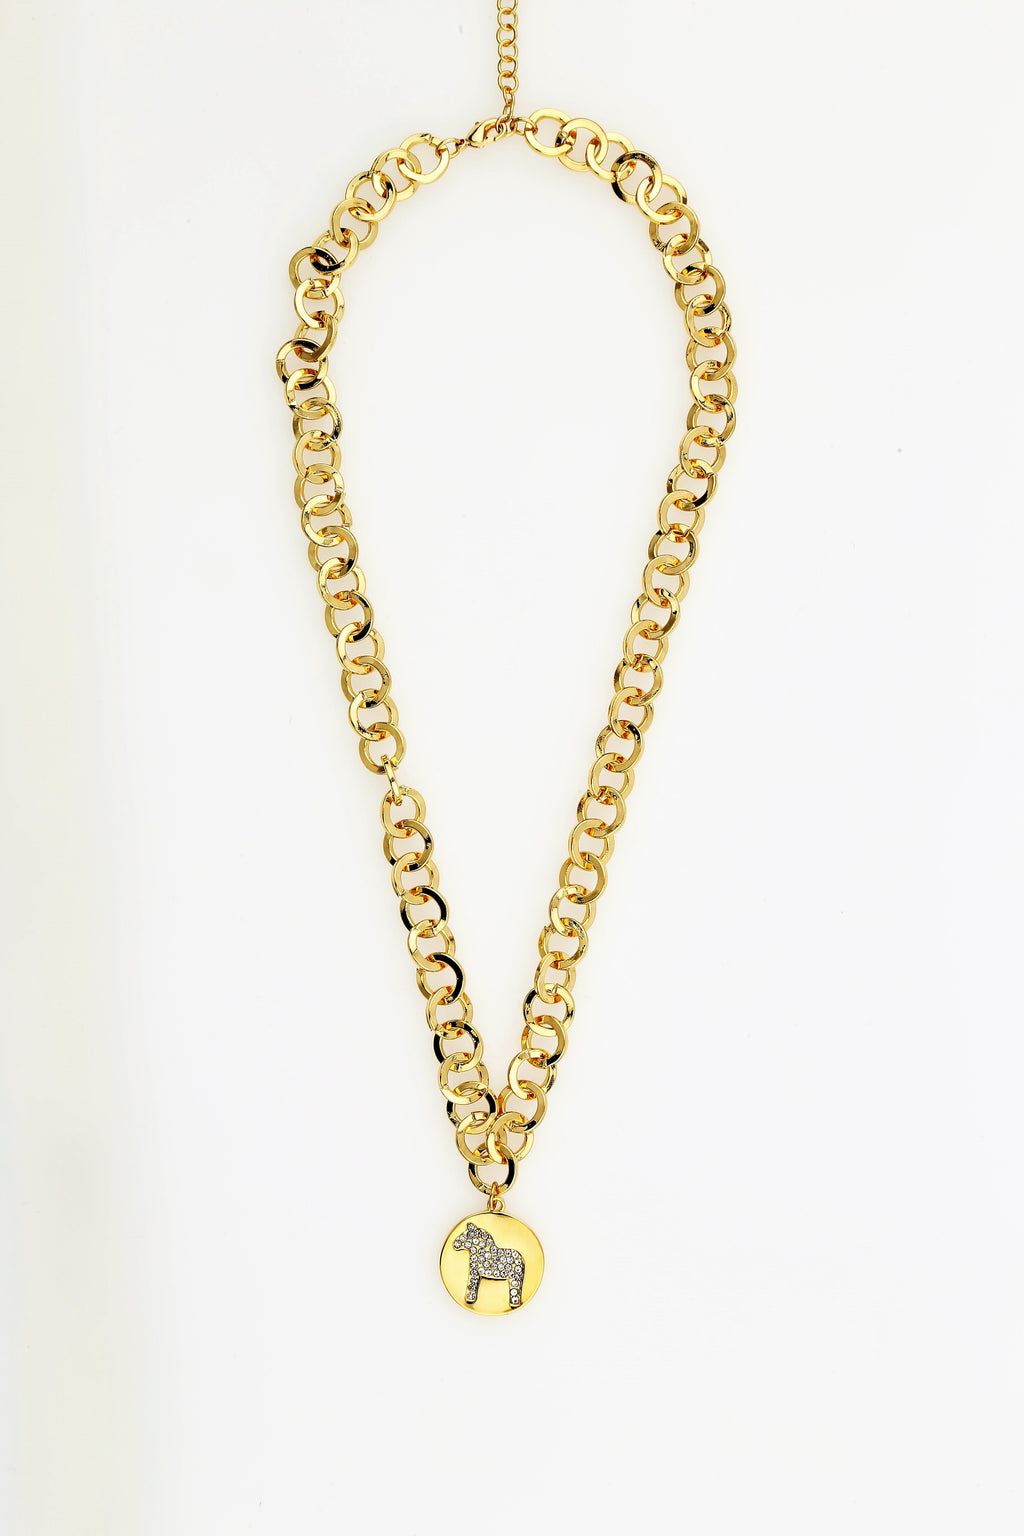 Nordic Necklace Gold Dalahorse 45cm/Halsband Dalahäst